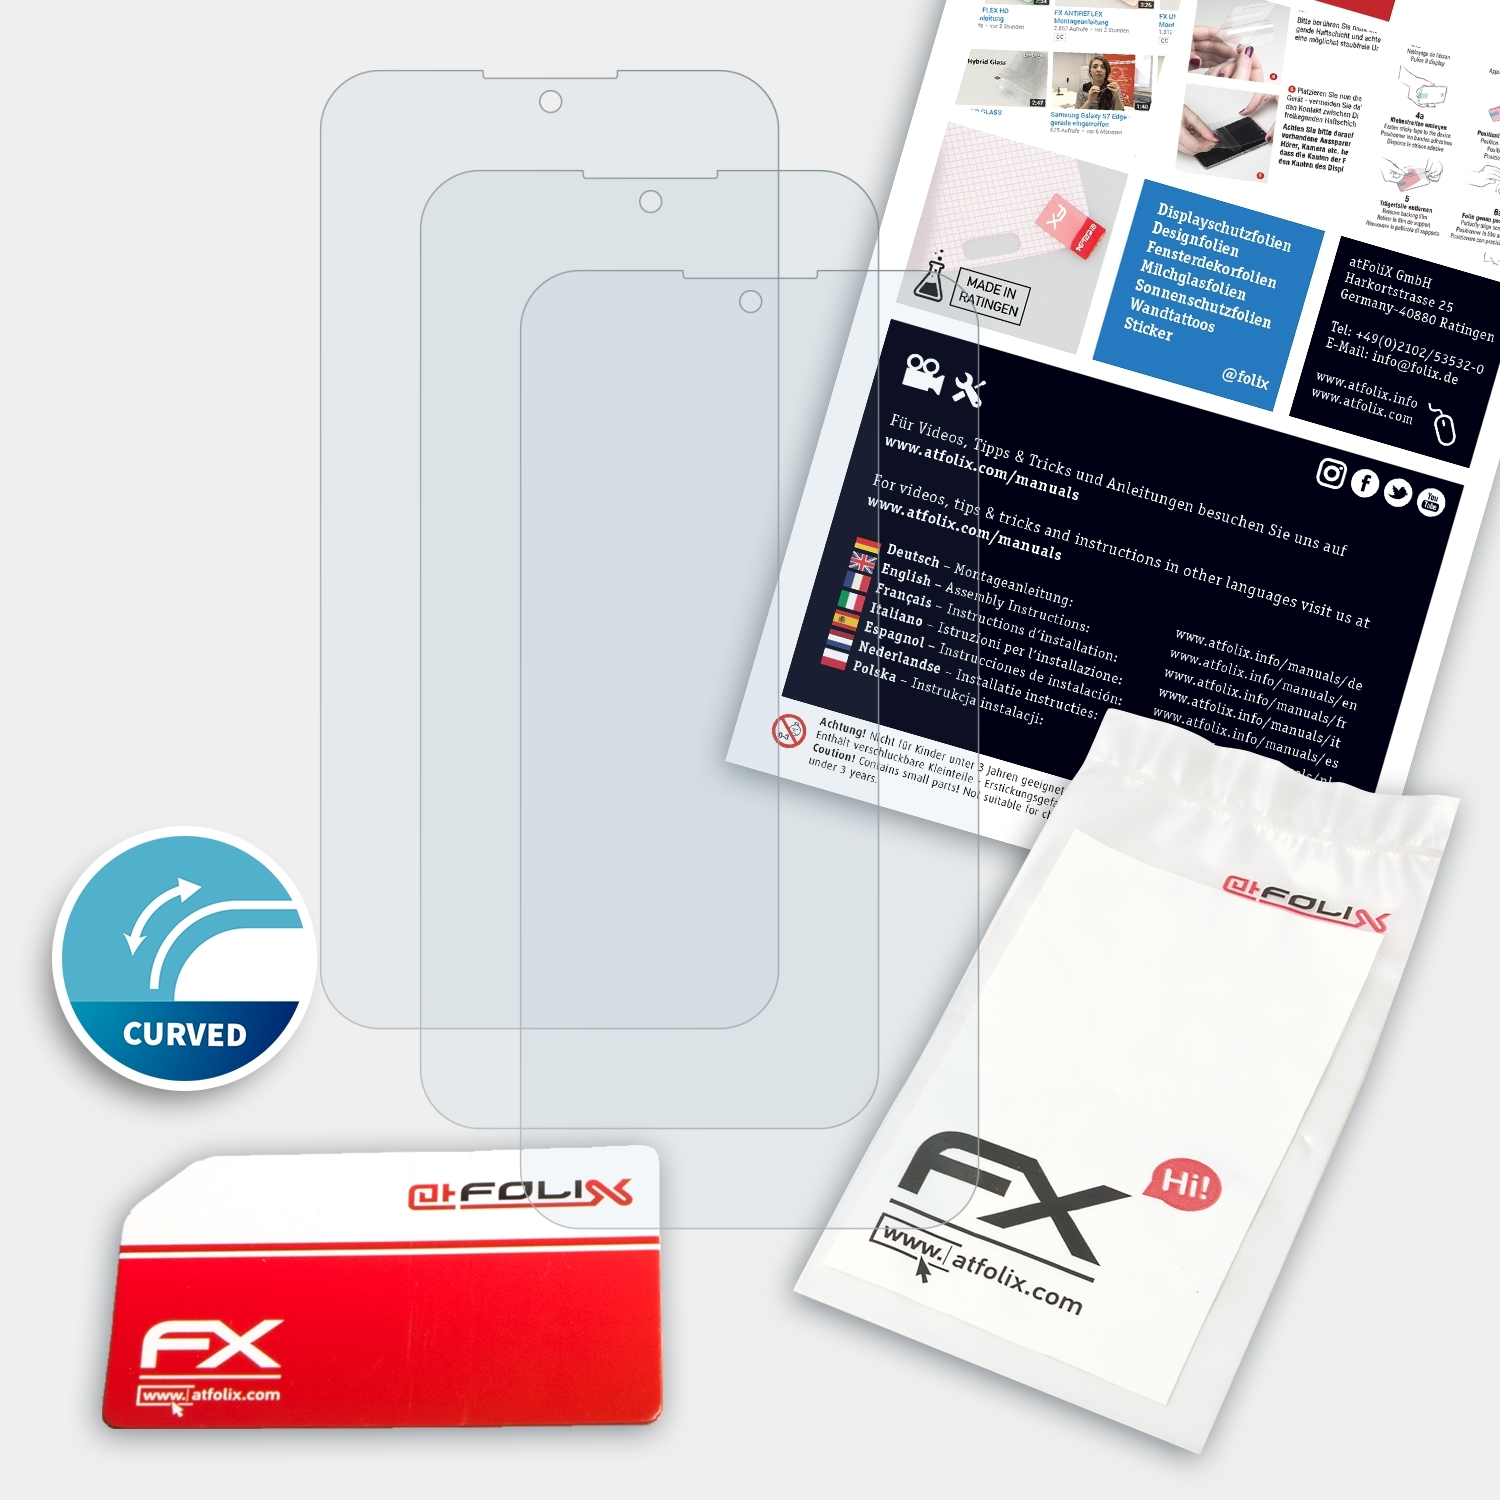 FX-ActiFleX Mi Play) 3x Displayschutz(für Xiaomi ATFOLIX